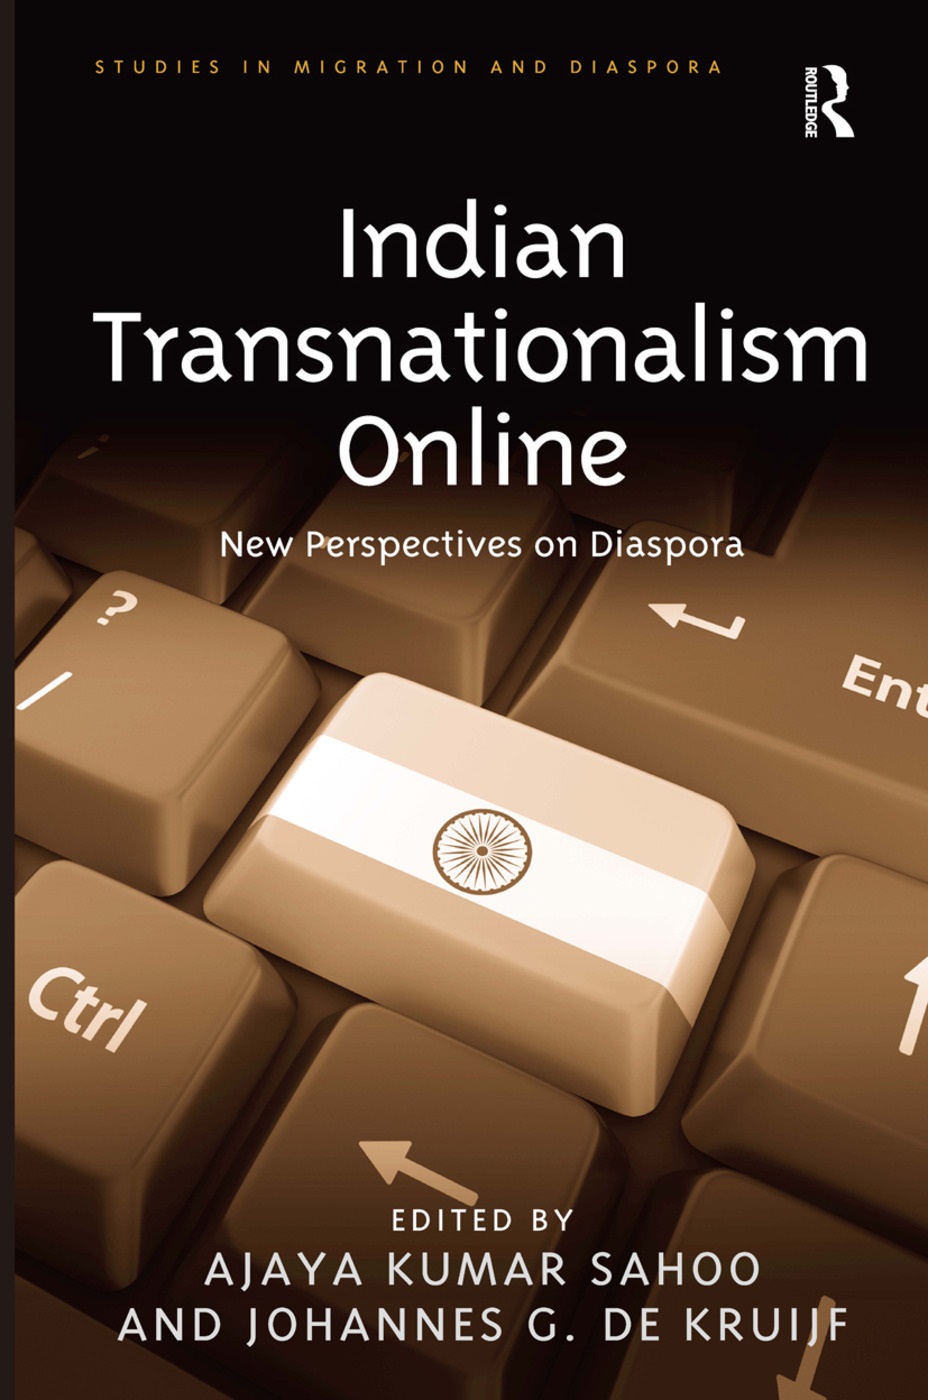 Cover: Sahoo & De Krujf (2014). Indian Transnationalism Online: New Perspectives on Diaspora.